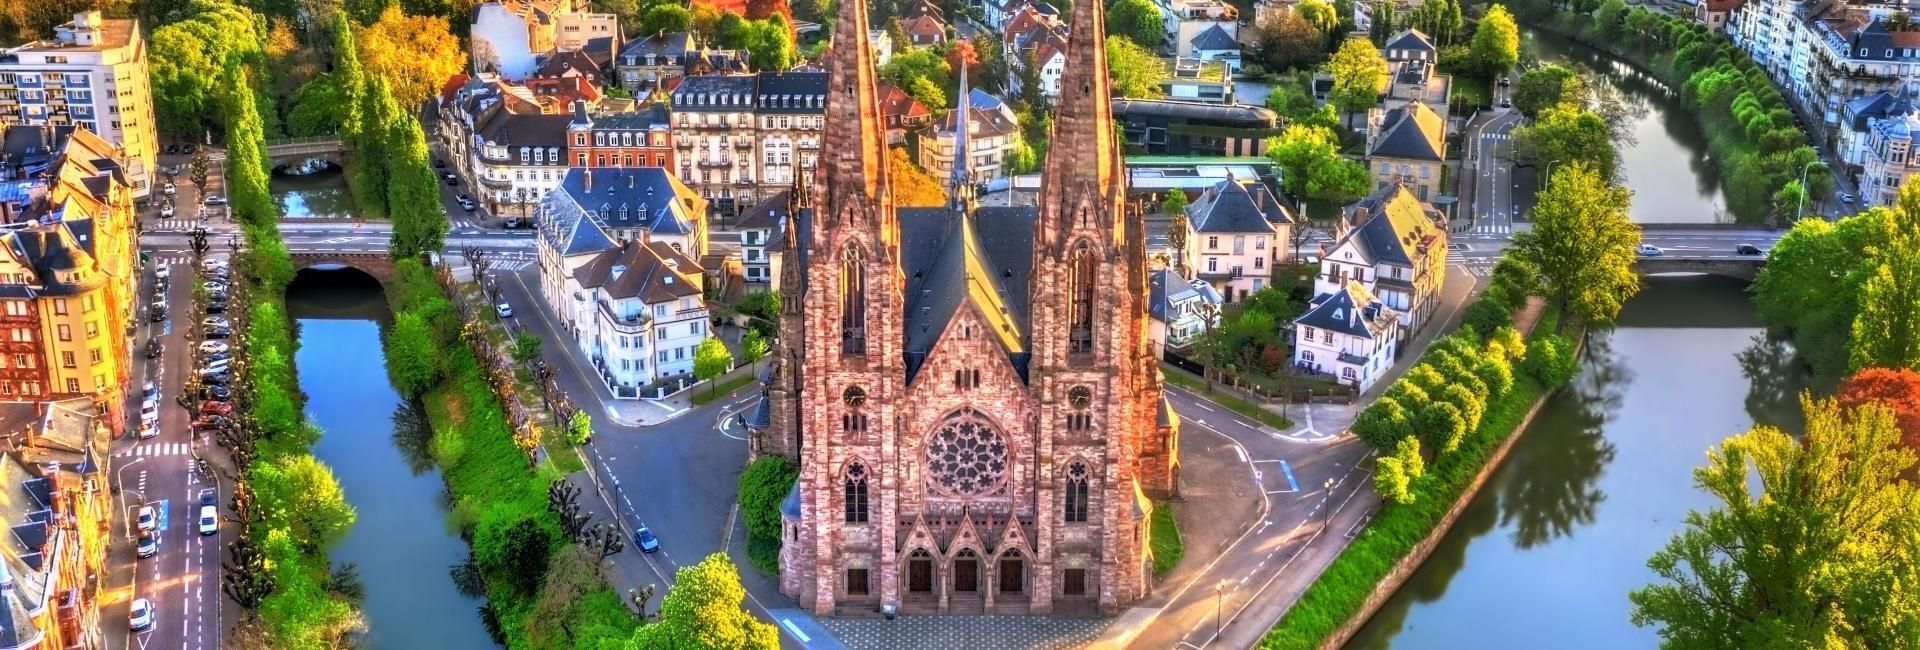 4 sites incontournables à visiter à Strasbourg